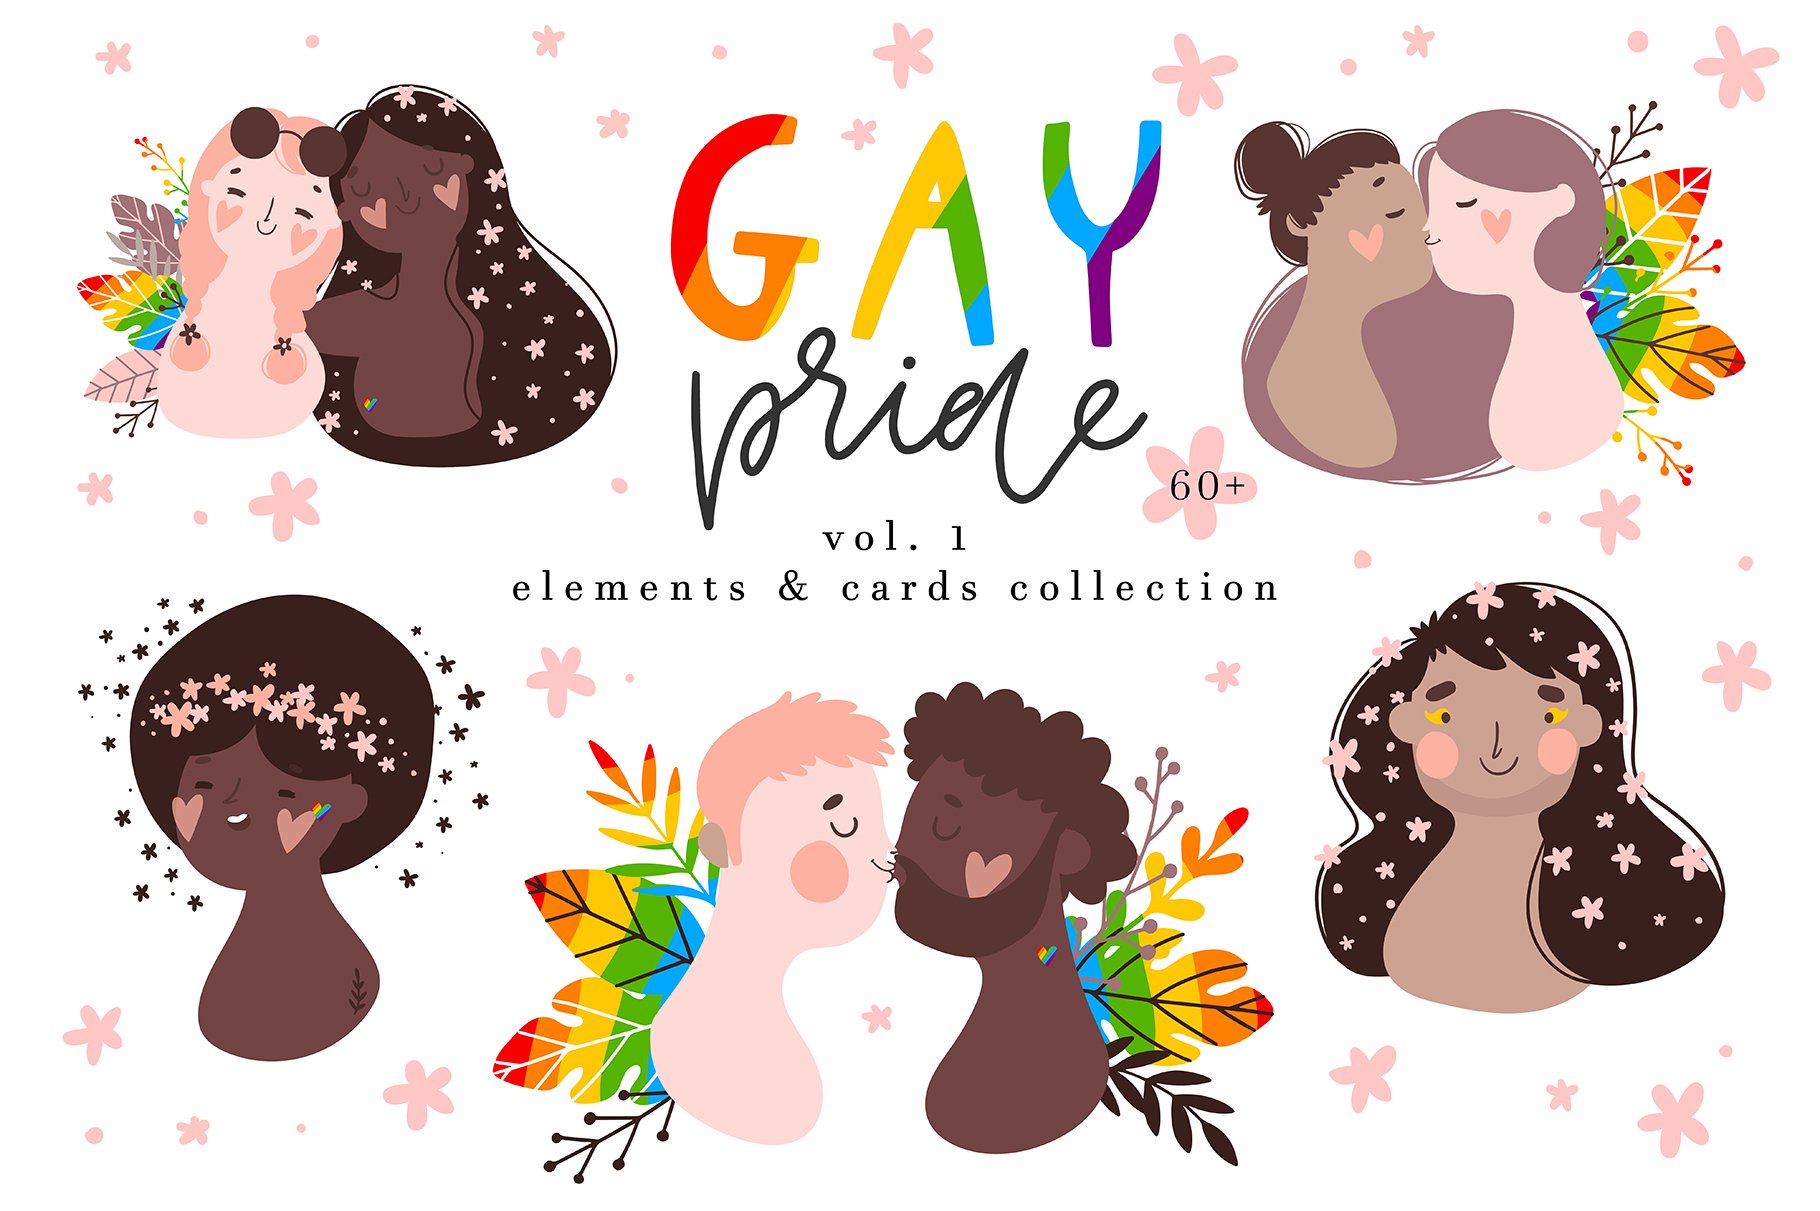 GAY pride illustrations set Vol. 1 cover image.